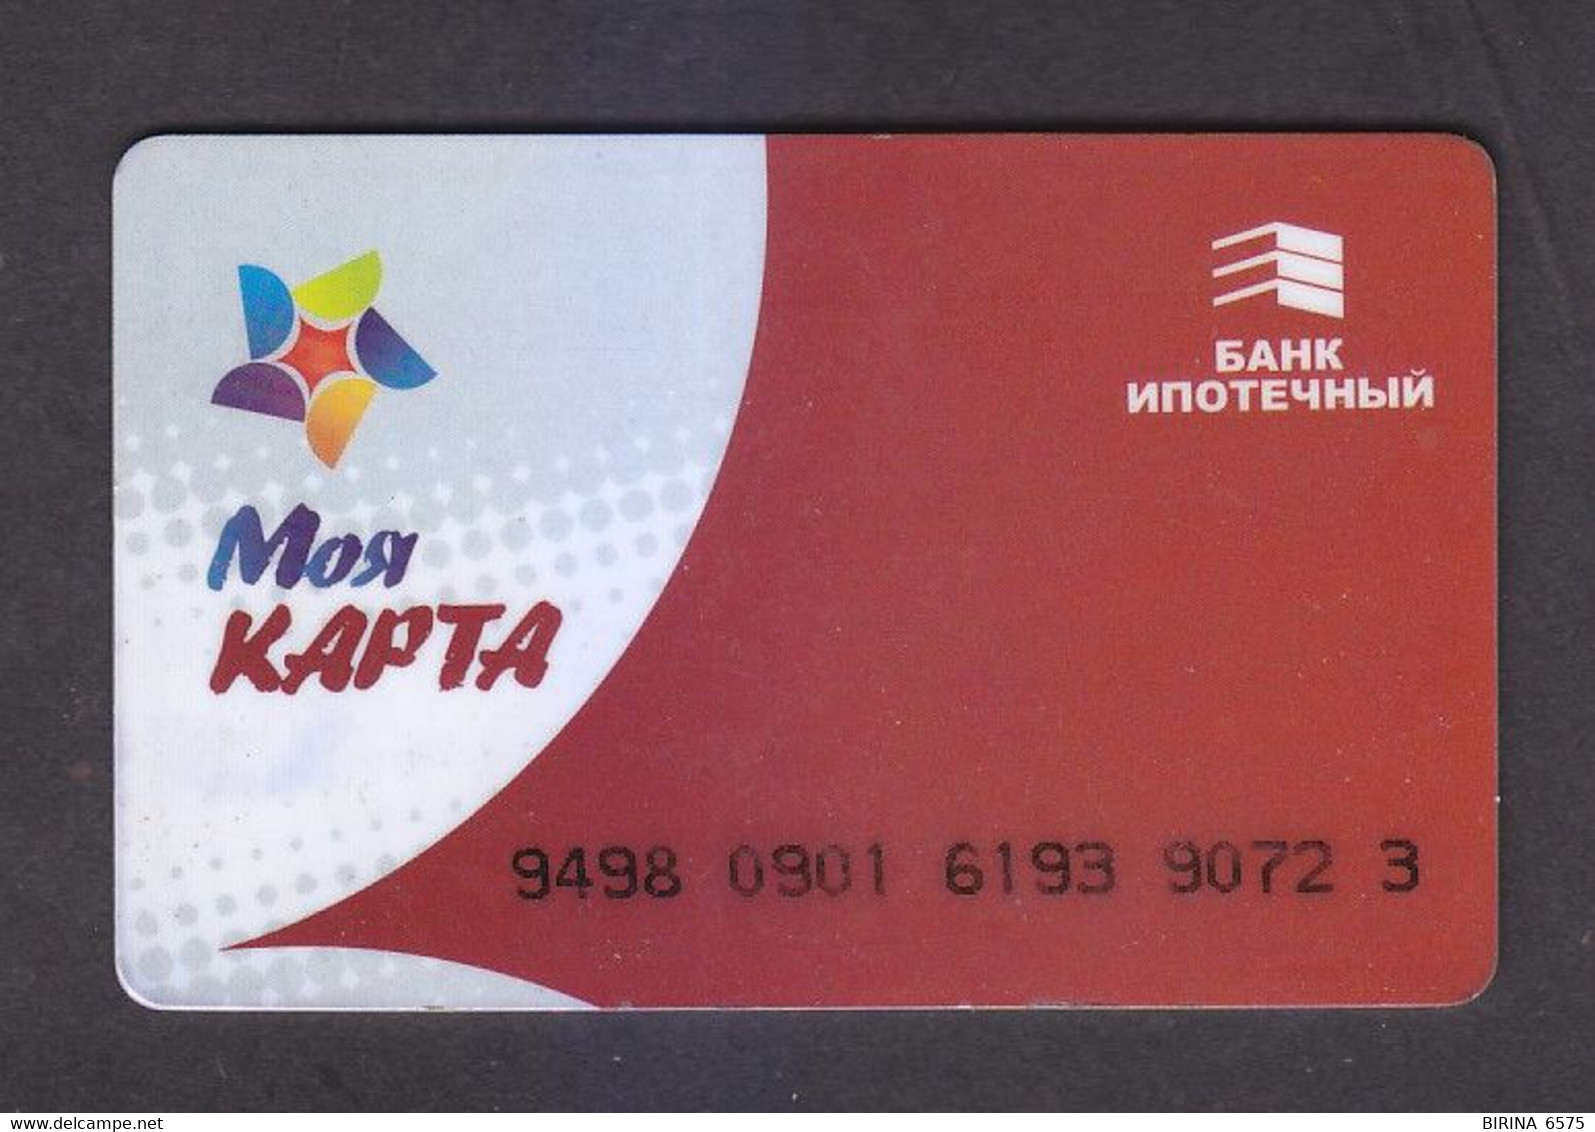 BANK CARD. IPOTECHNYIY BANK. MOLDOVA. TRANSNISTRIA. 2015. - 1-2 - Moldavie